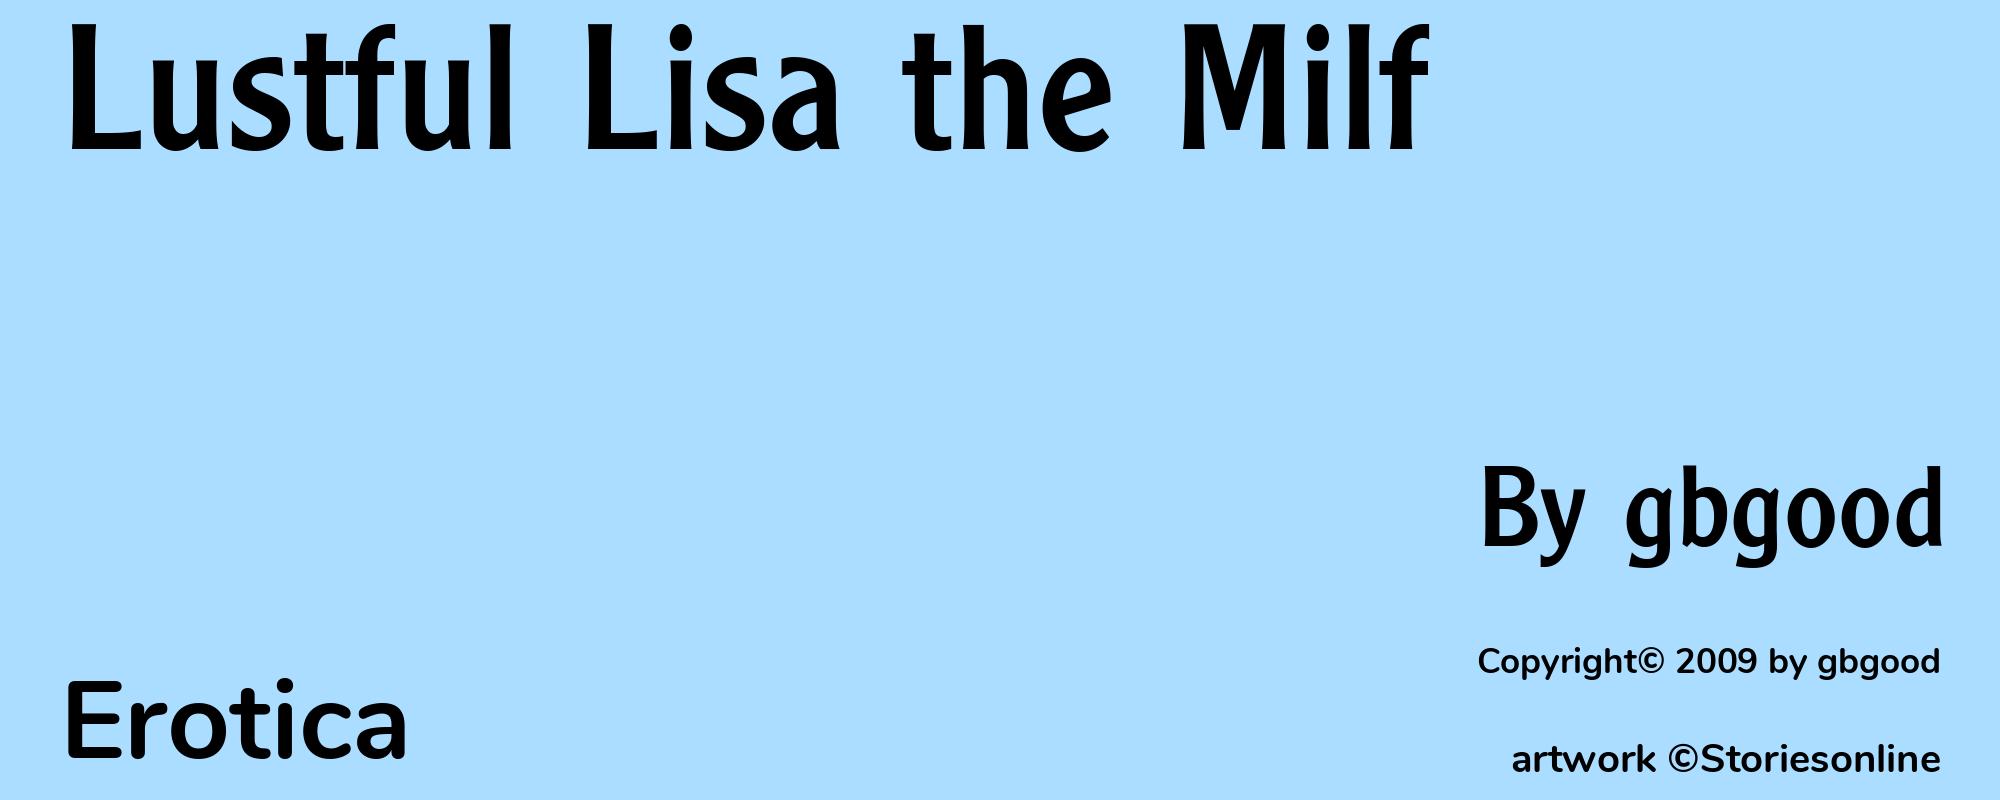 Lustful Lisa the Milf - Cover